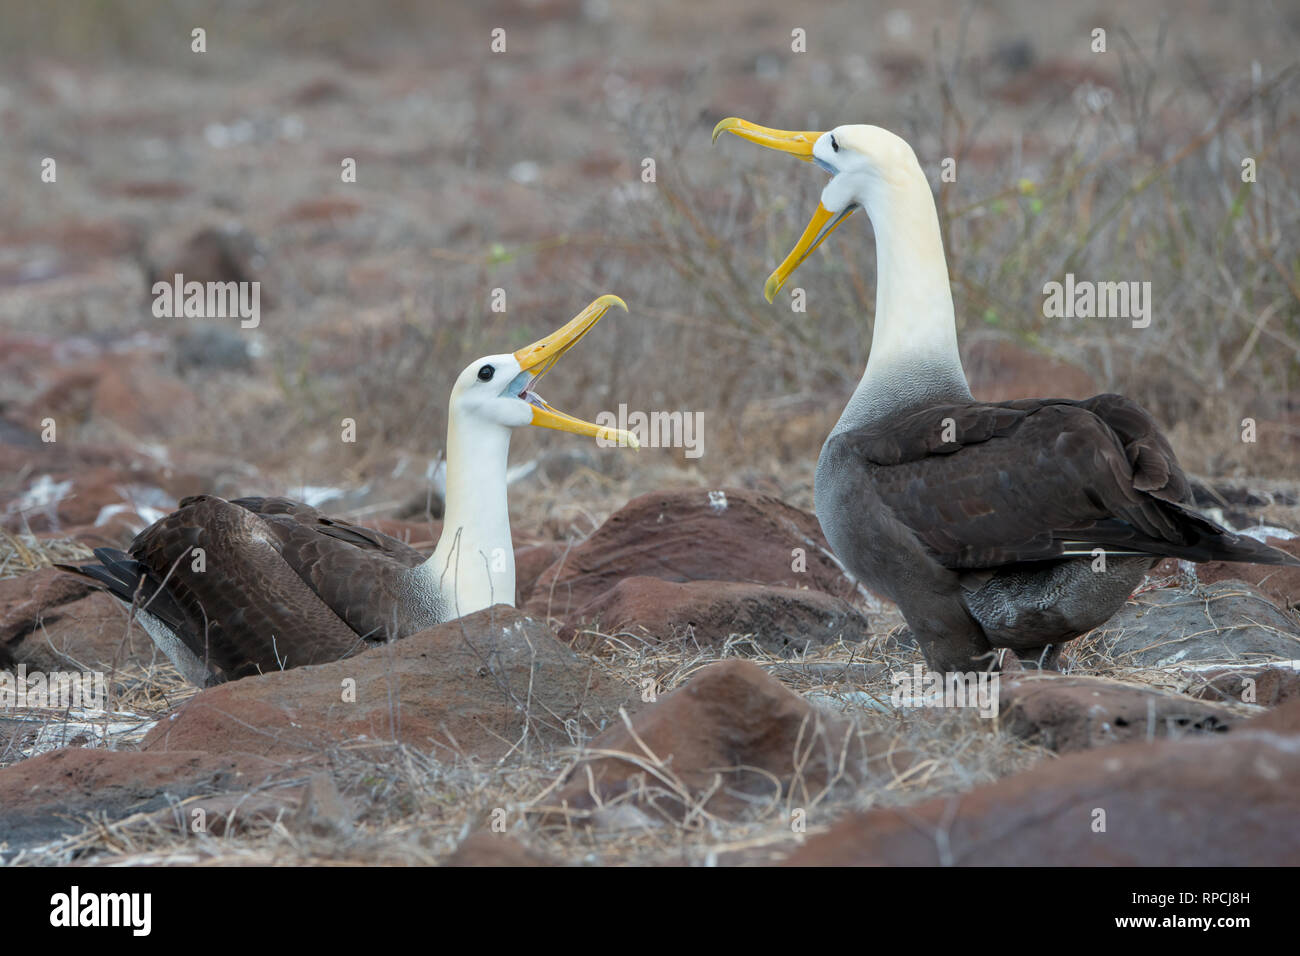 A breeding pair of Waved Albatross (Phoebastria irrorata) on Espanola Island in Galapagos Stock Photo